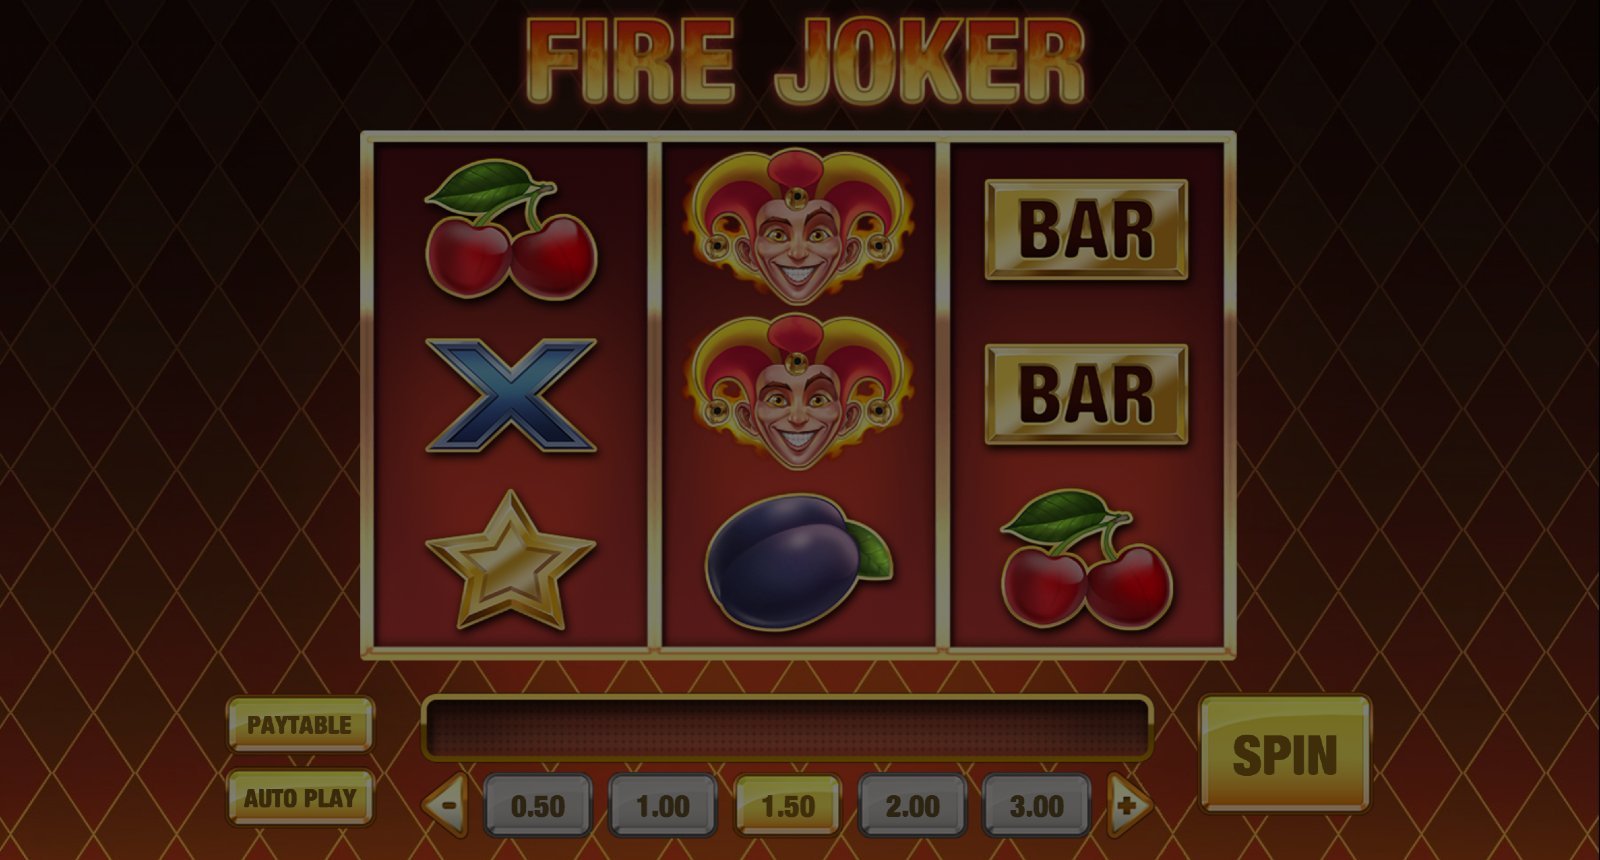 Fire Joker demo